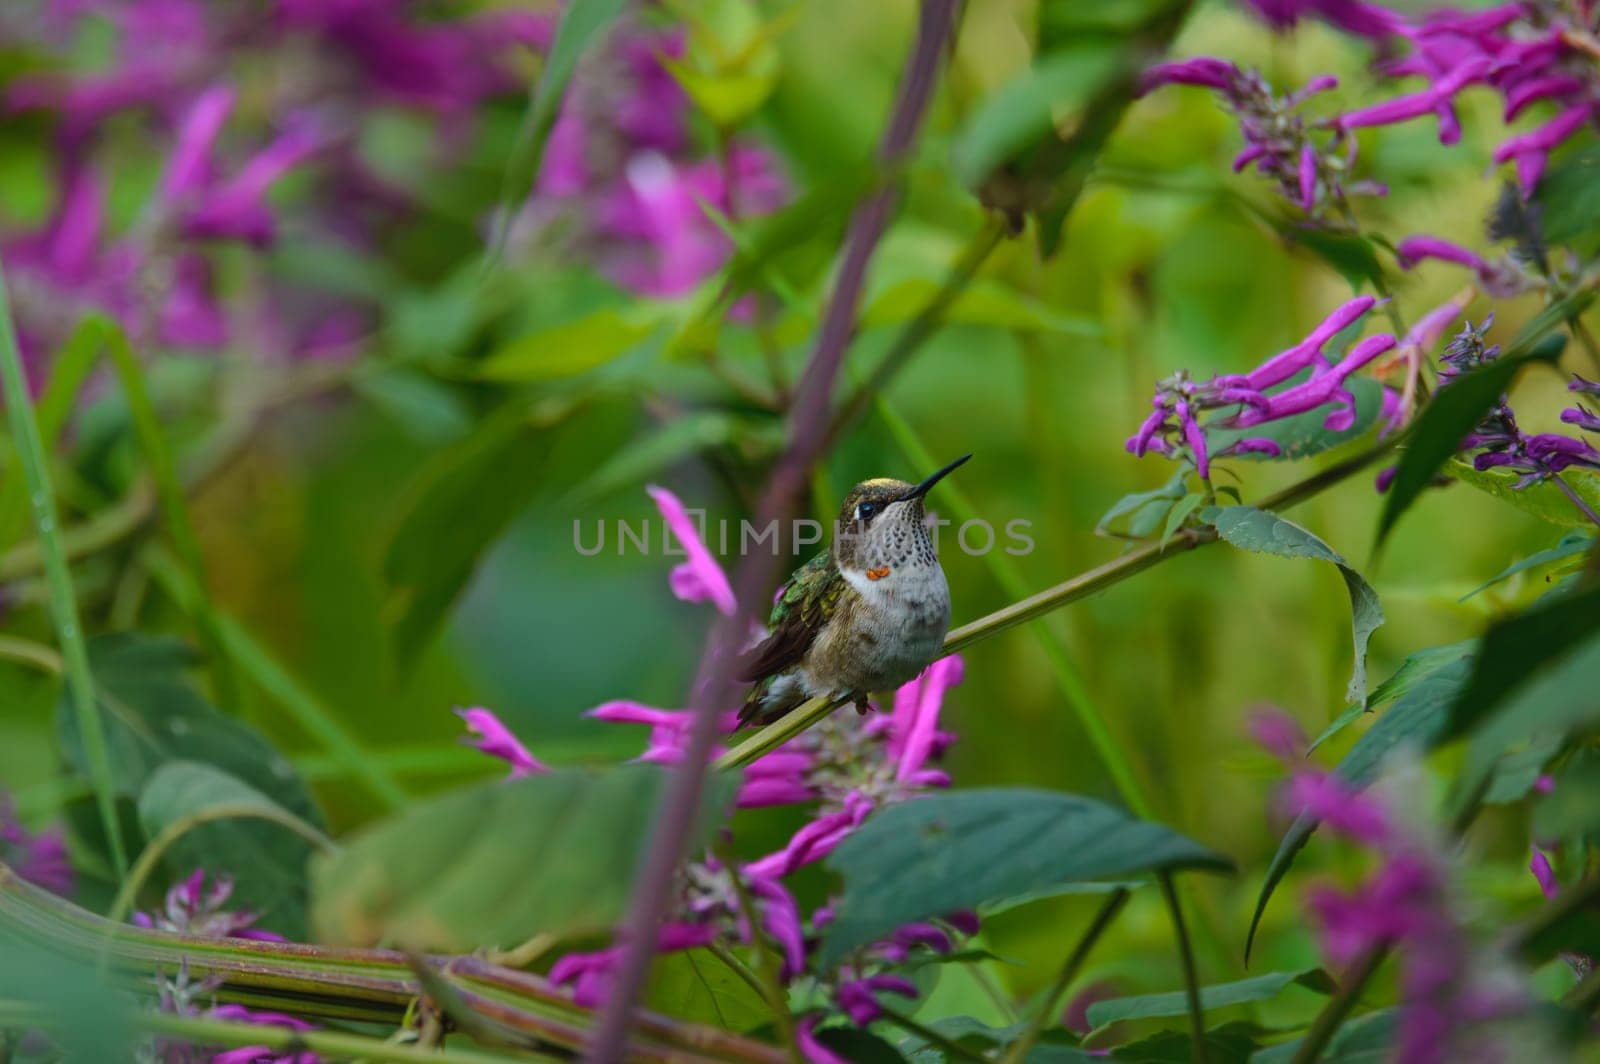 Calliope Hummingbird, Selasphorus calliope, Sitting in Bushes in Oaxaca, Mexico by RobertPB